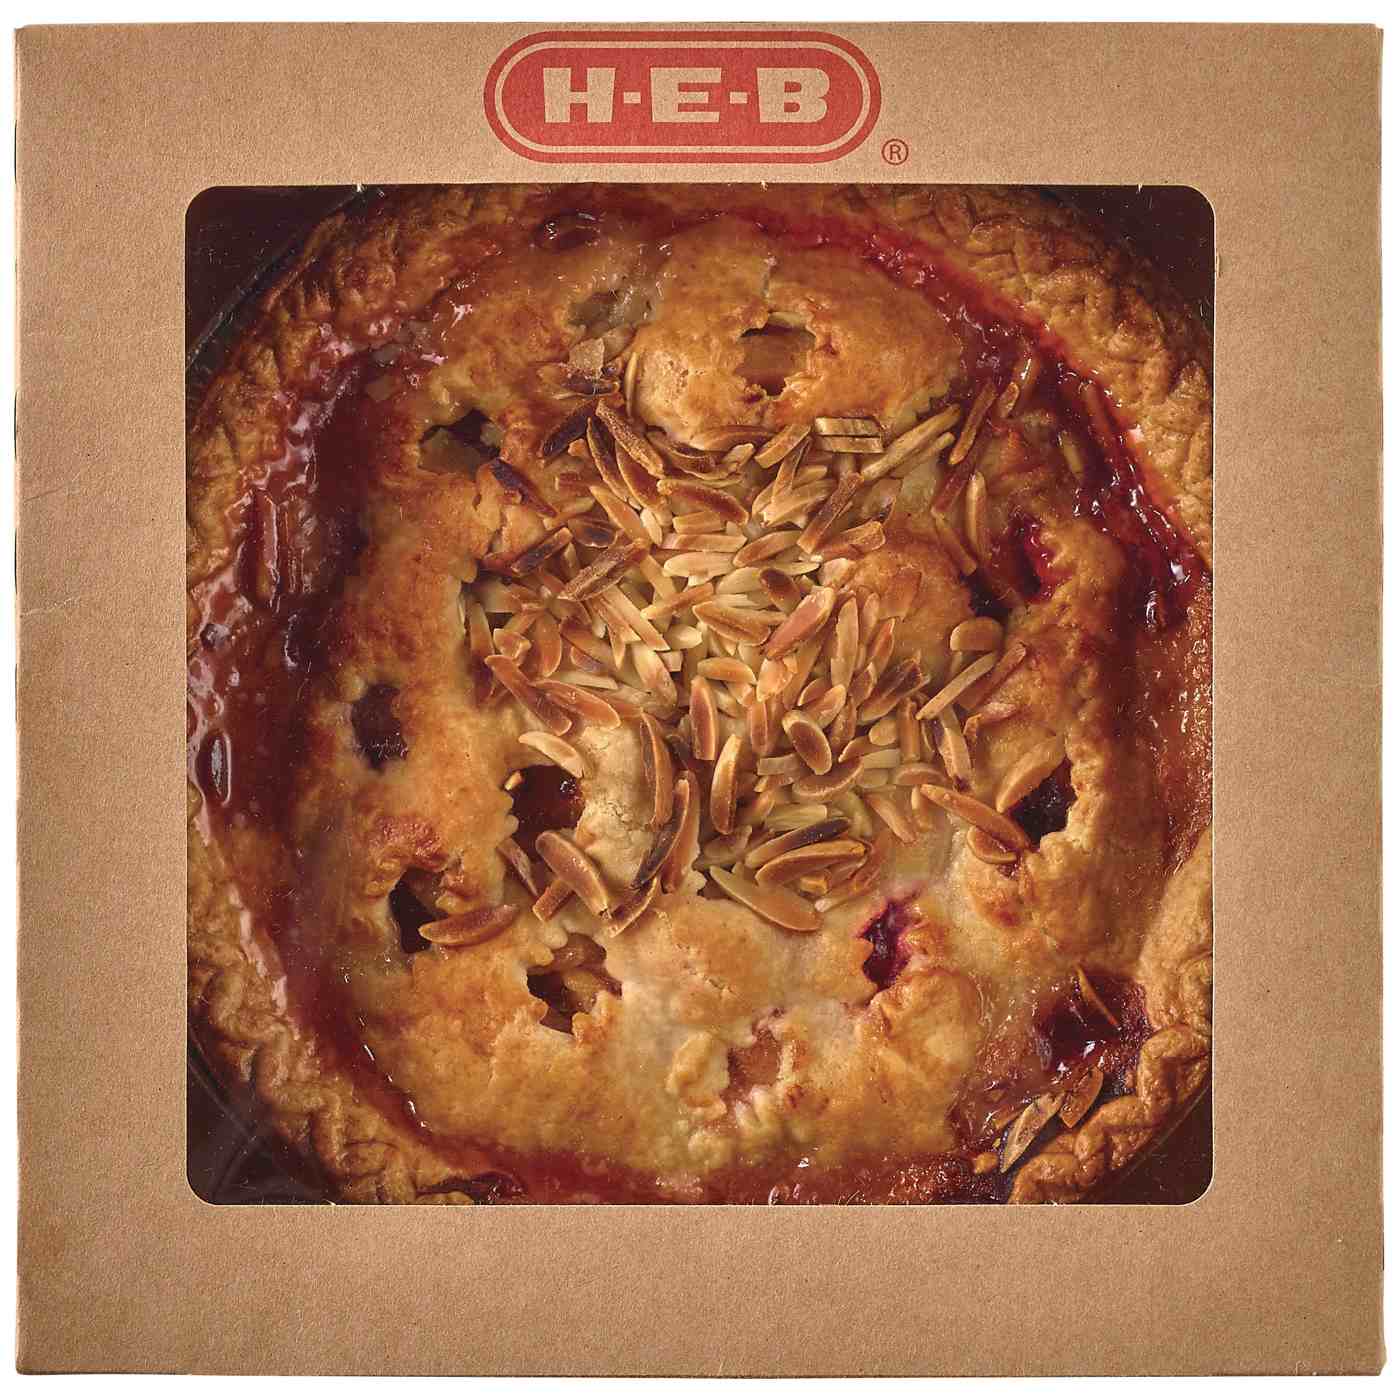 H-E-B Peach Melba Pie; image 2 of 4